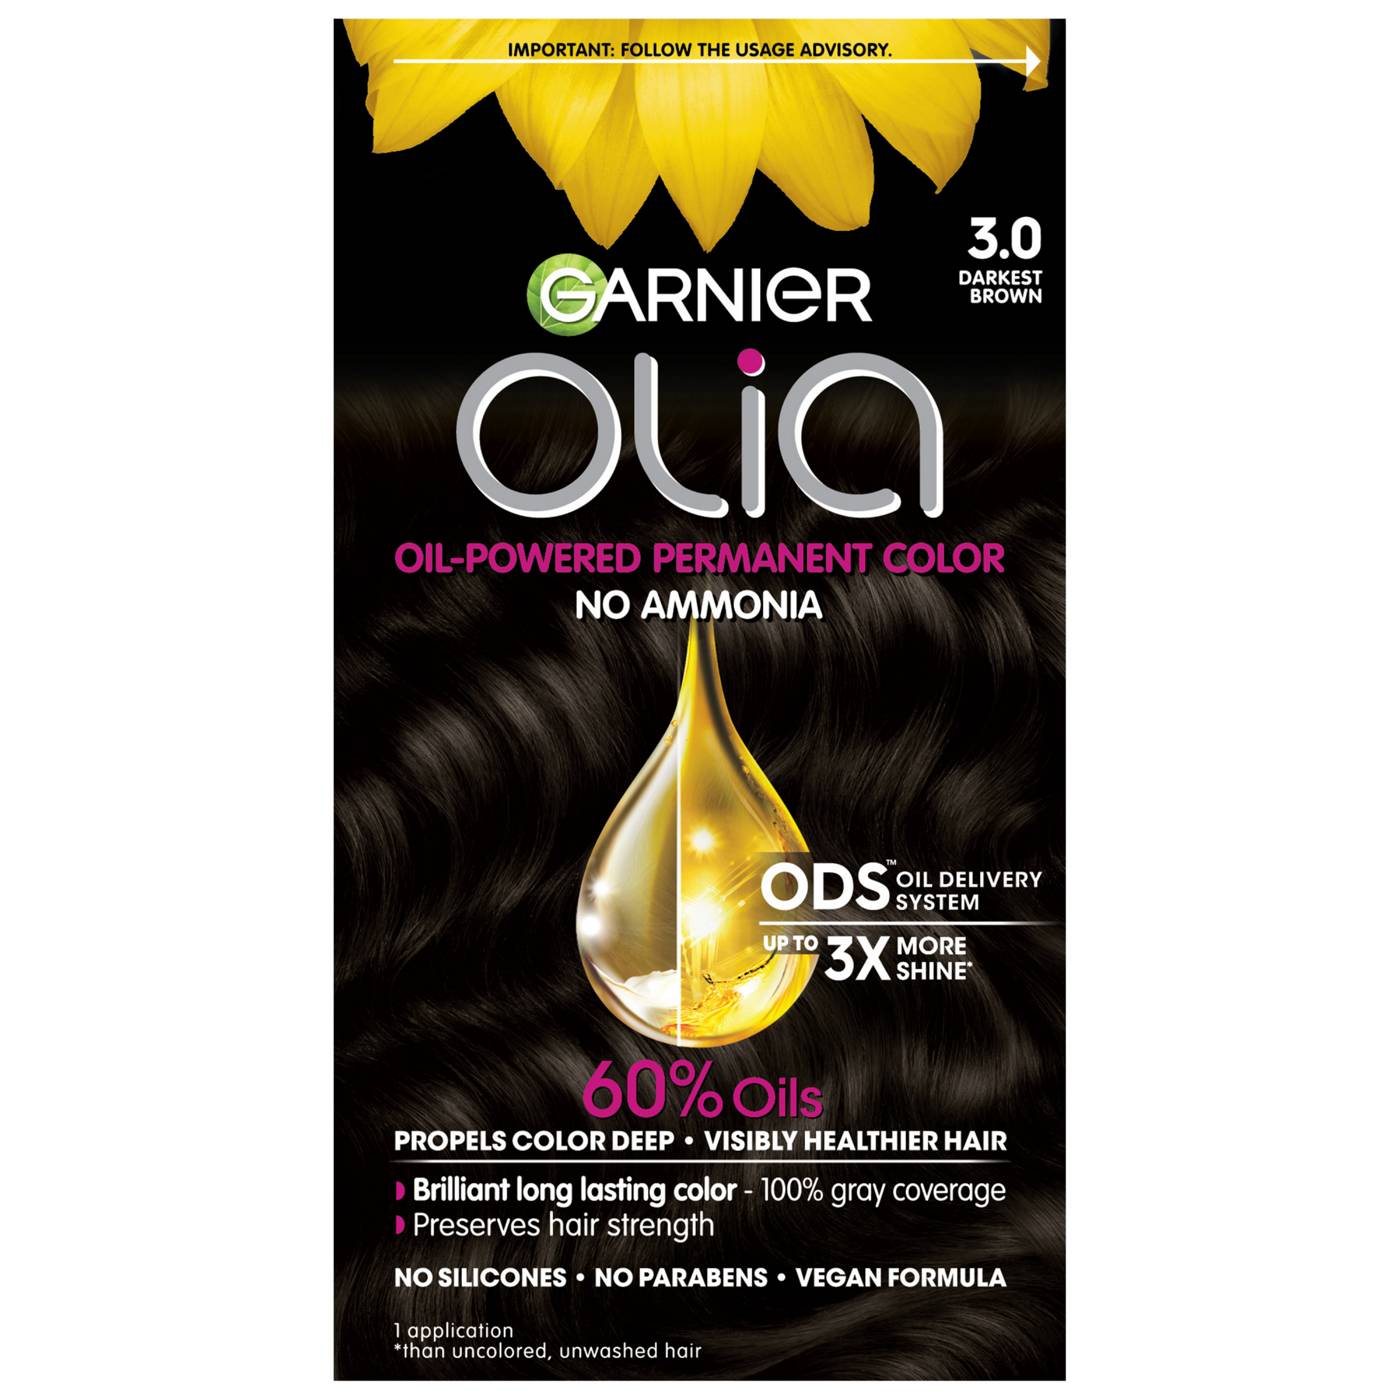 Garnier Olia Oil Powered Ammonia Free Permanent Hair Color 3.0 Darkest Brown; image 1 of 12